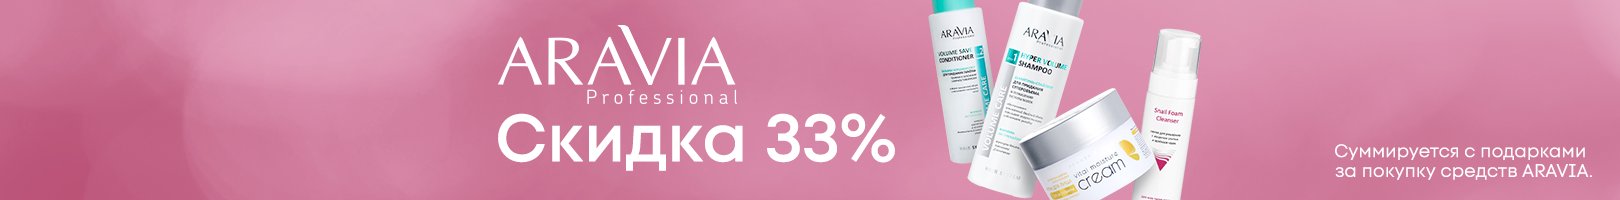 Aravia Professional — Скидка 33%